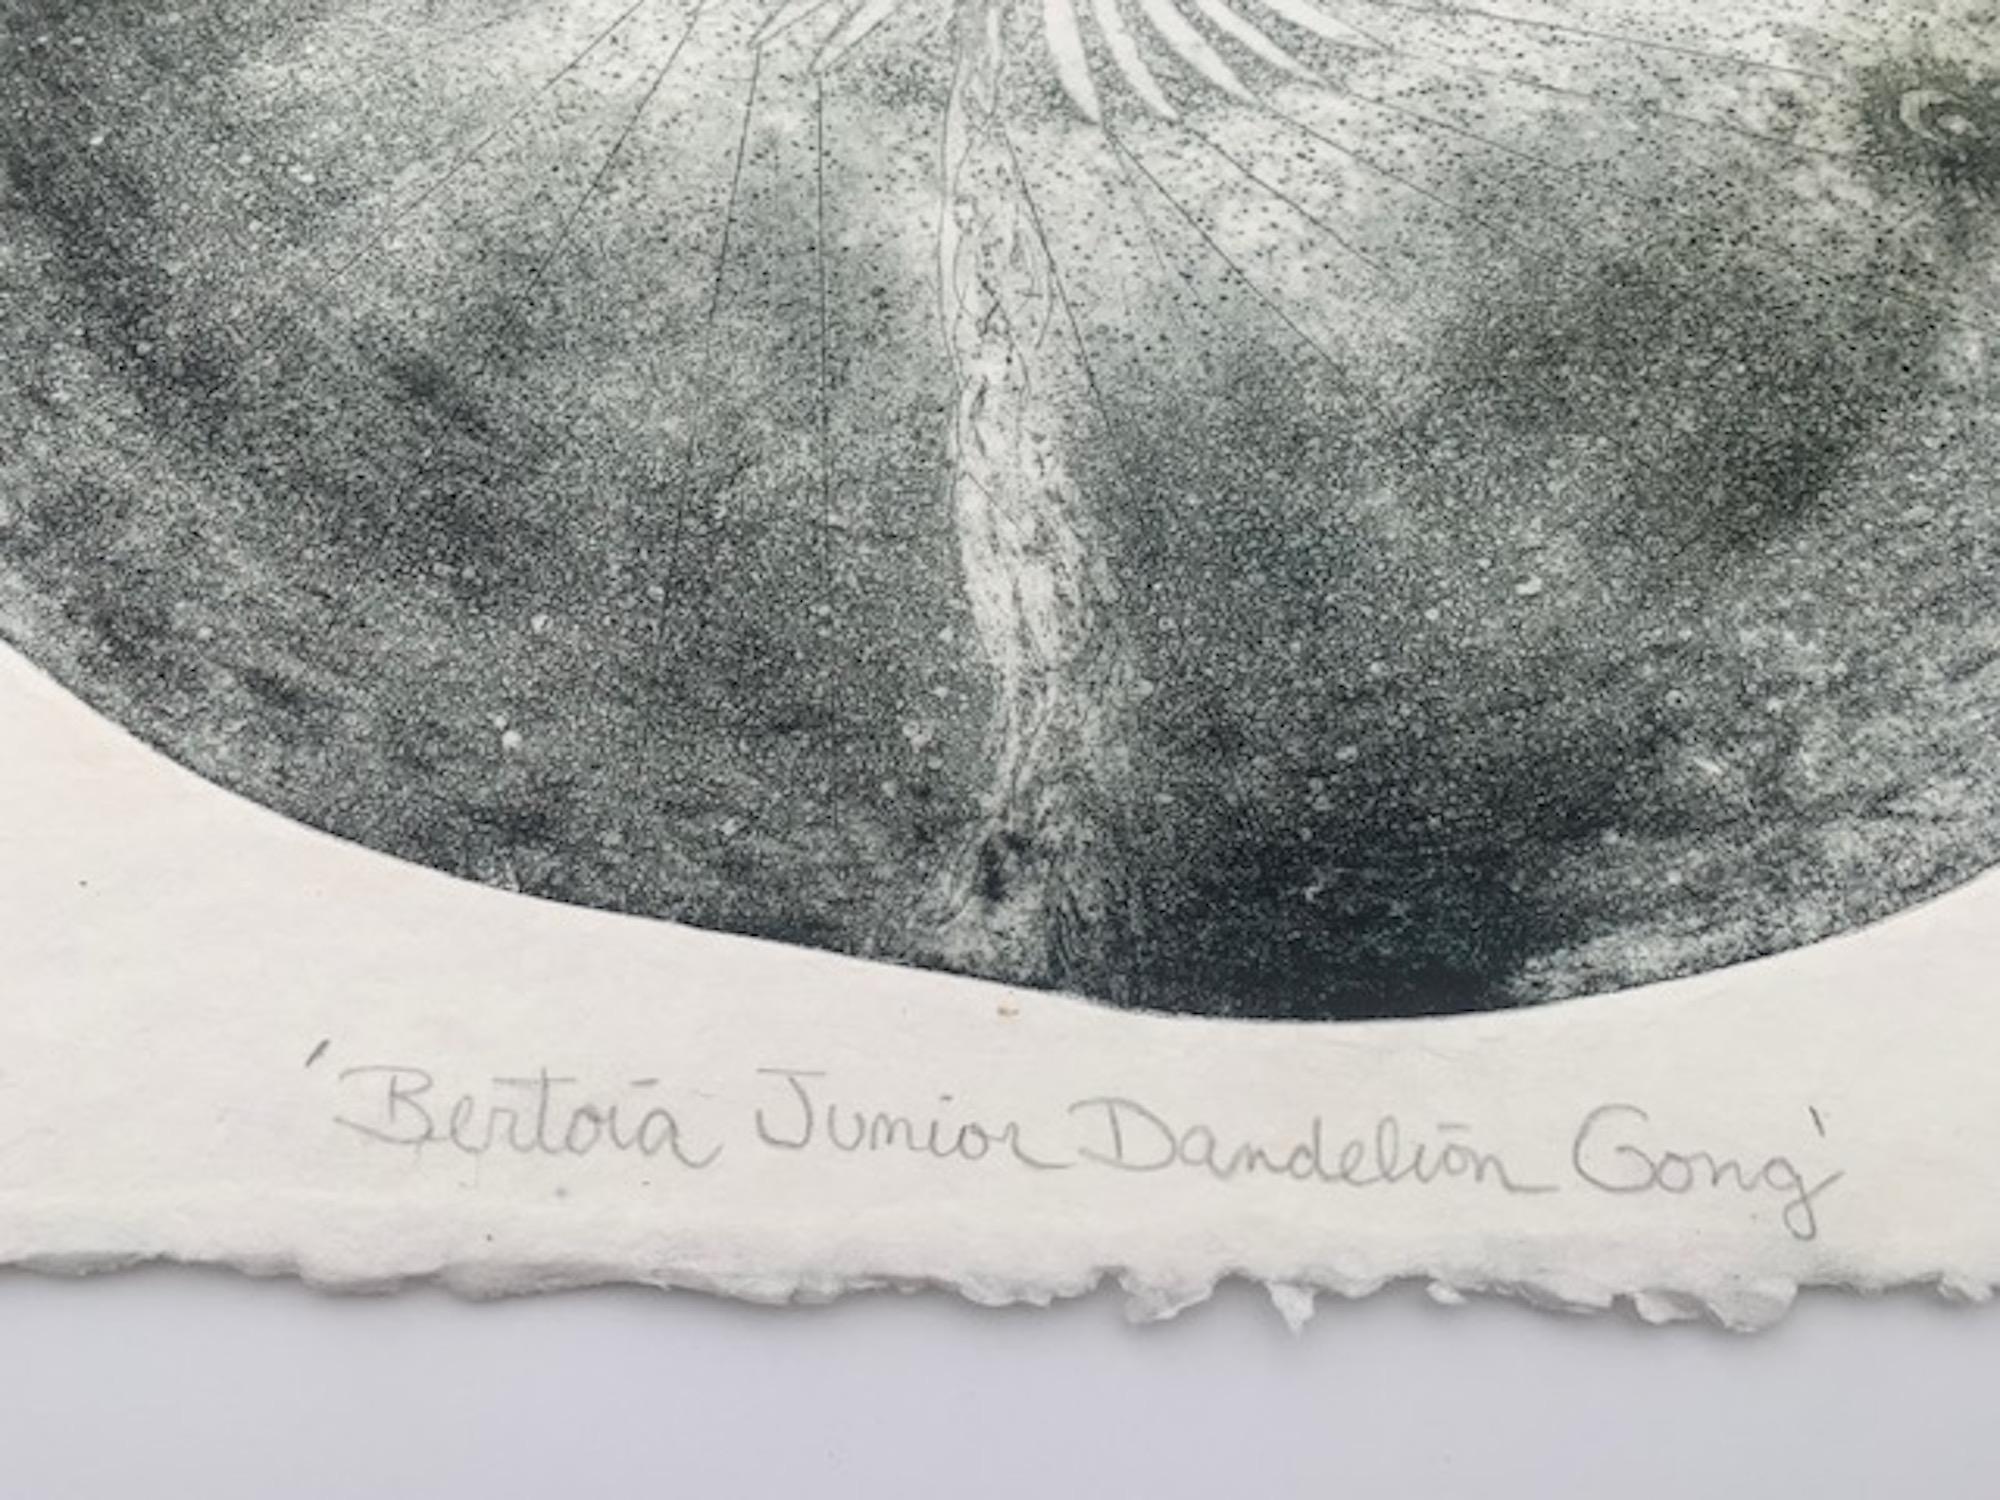 Mid-Century Modern Melissa Strawser Bertoia Junior Dandelion Gong Intaglio Print, 2016 For Sale